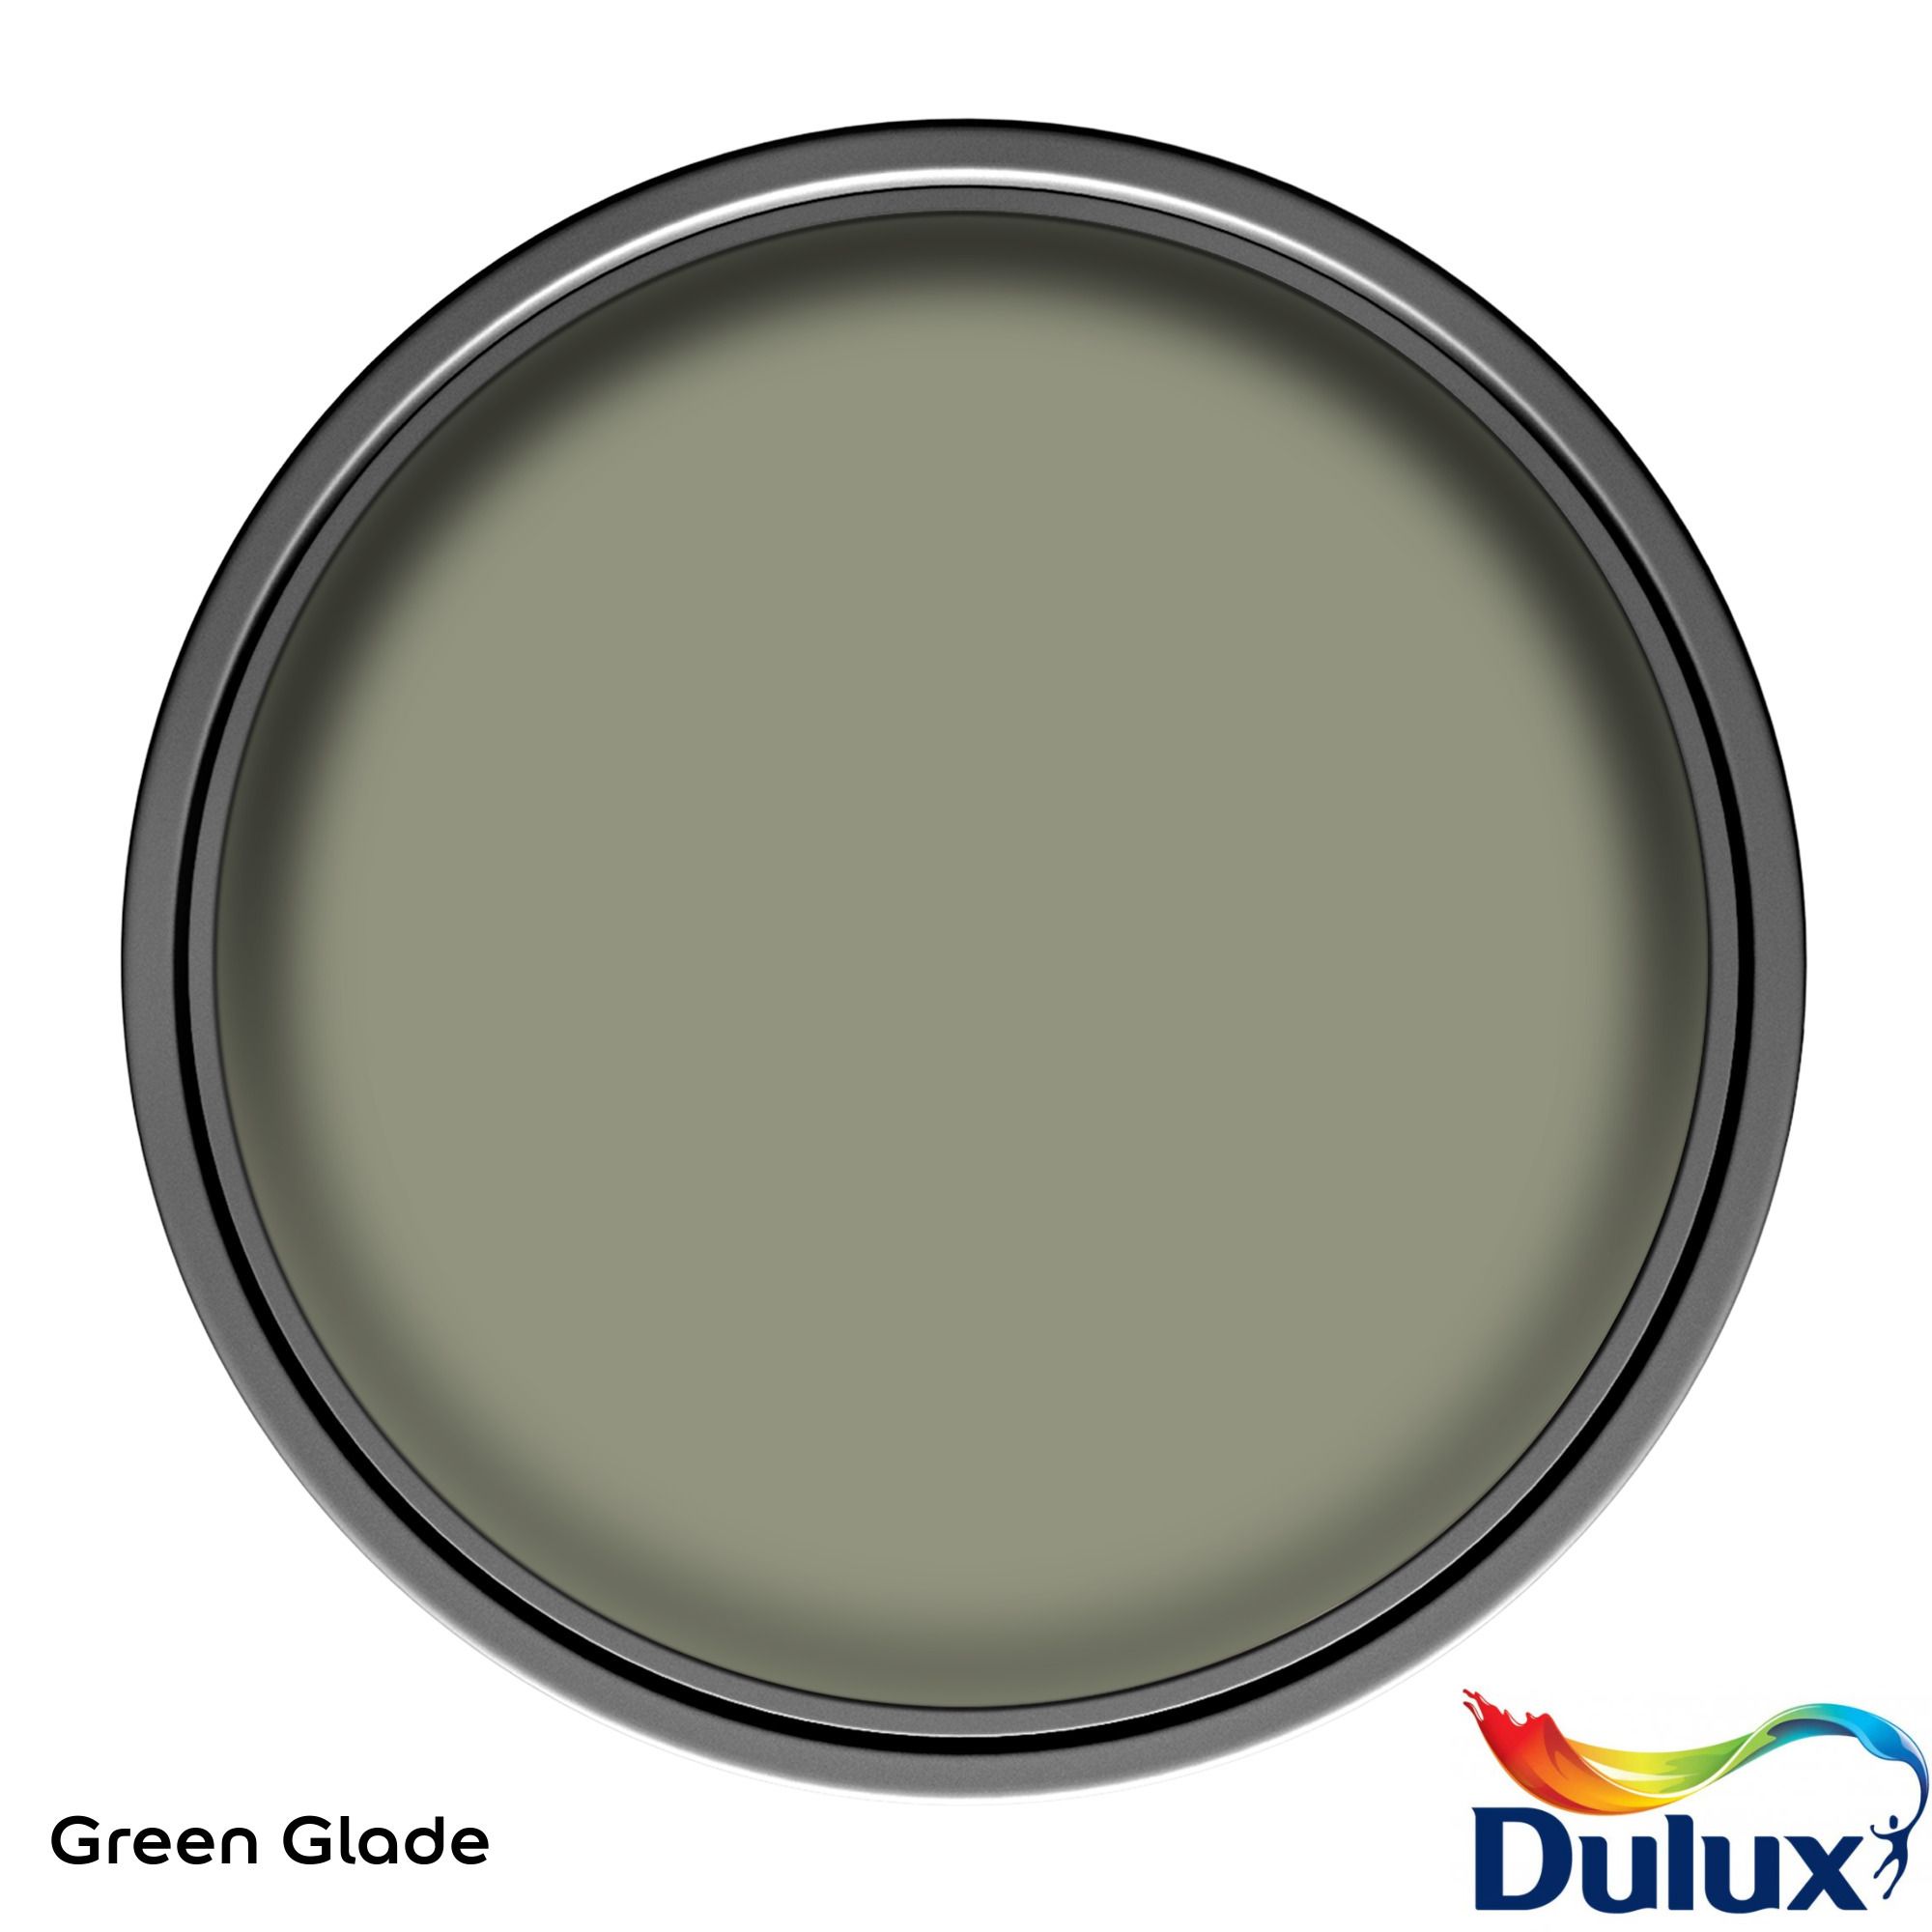 Dulux Weathershield Green Glade Satinwood Multi-surface paint, 750ml